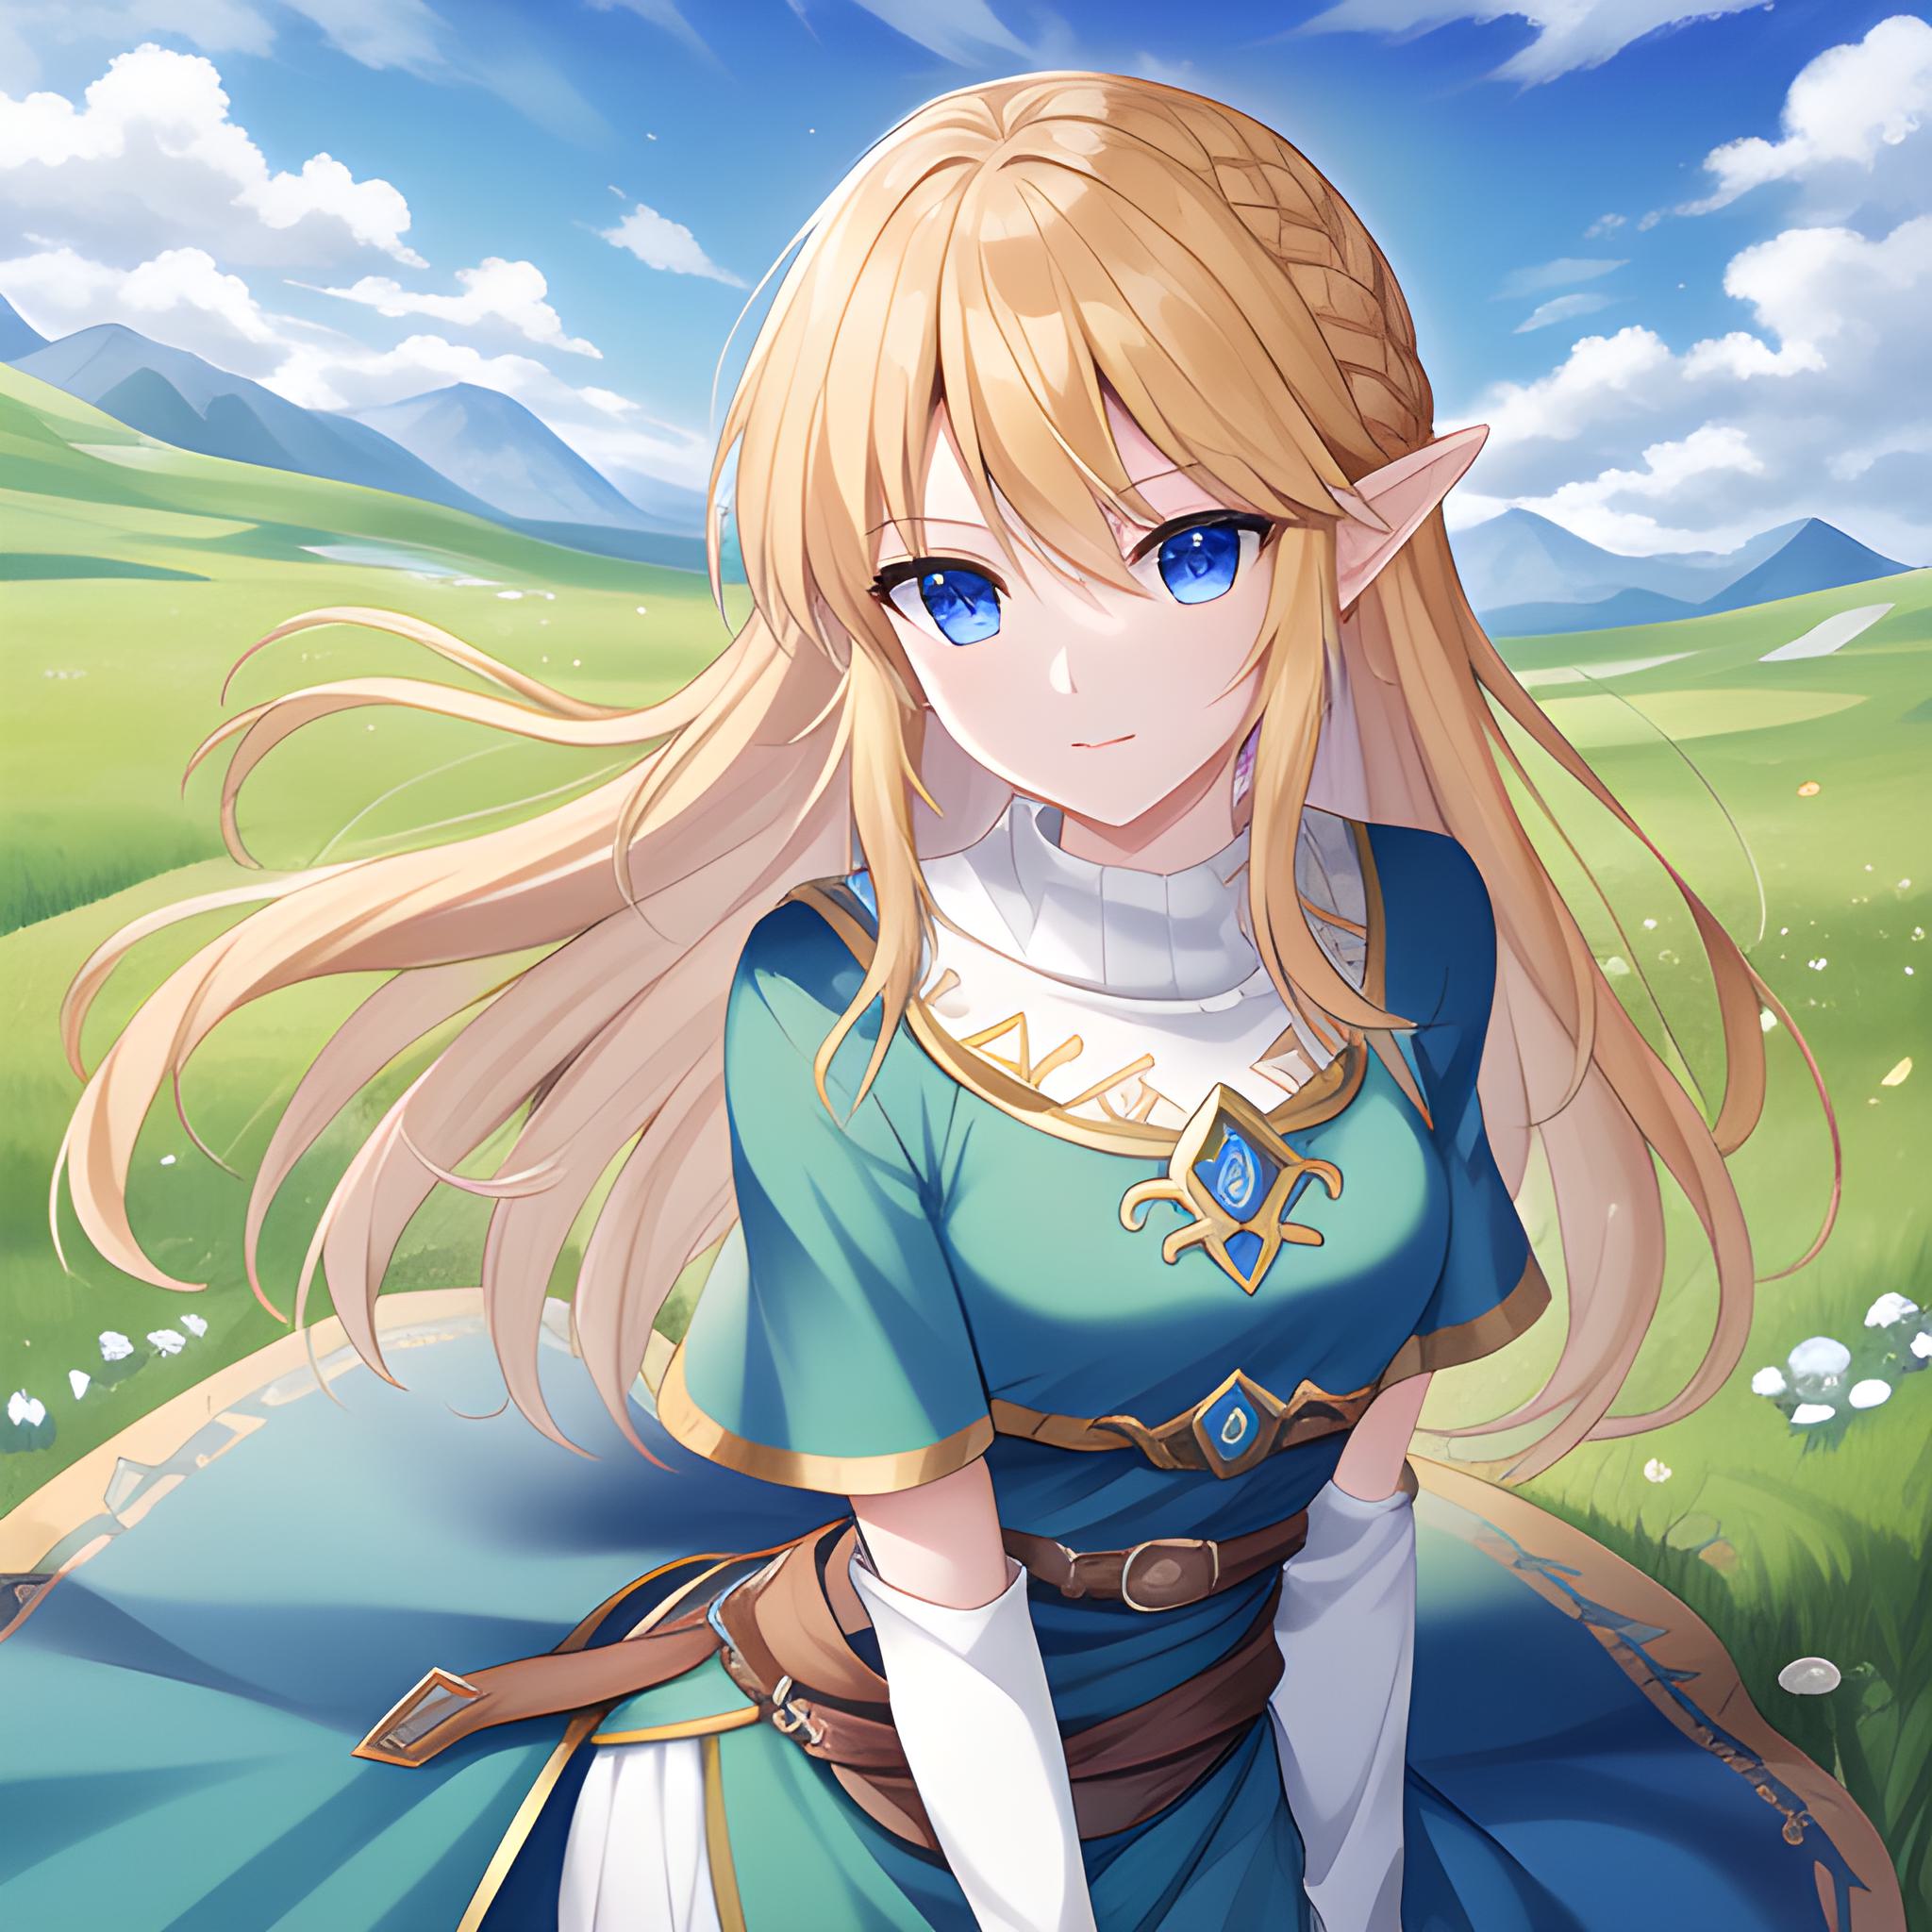 Princess Zelda 1 by UtopAIart on DeviantArt